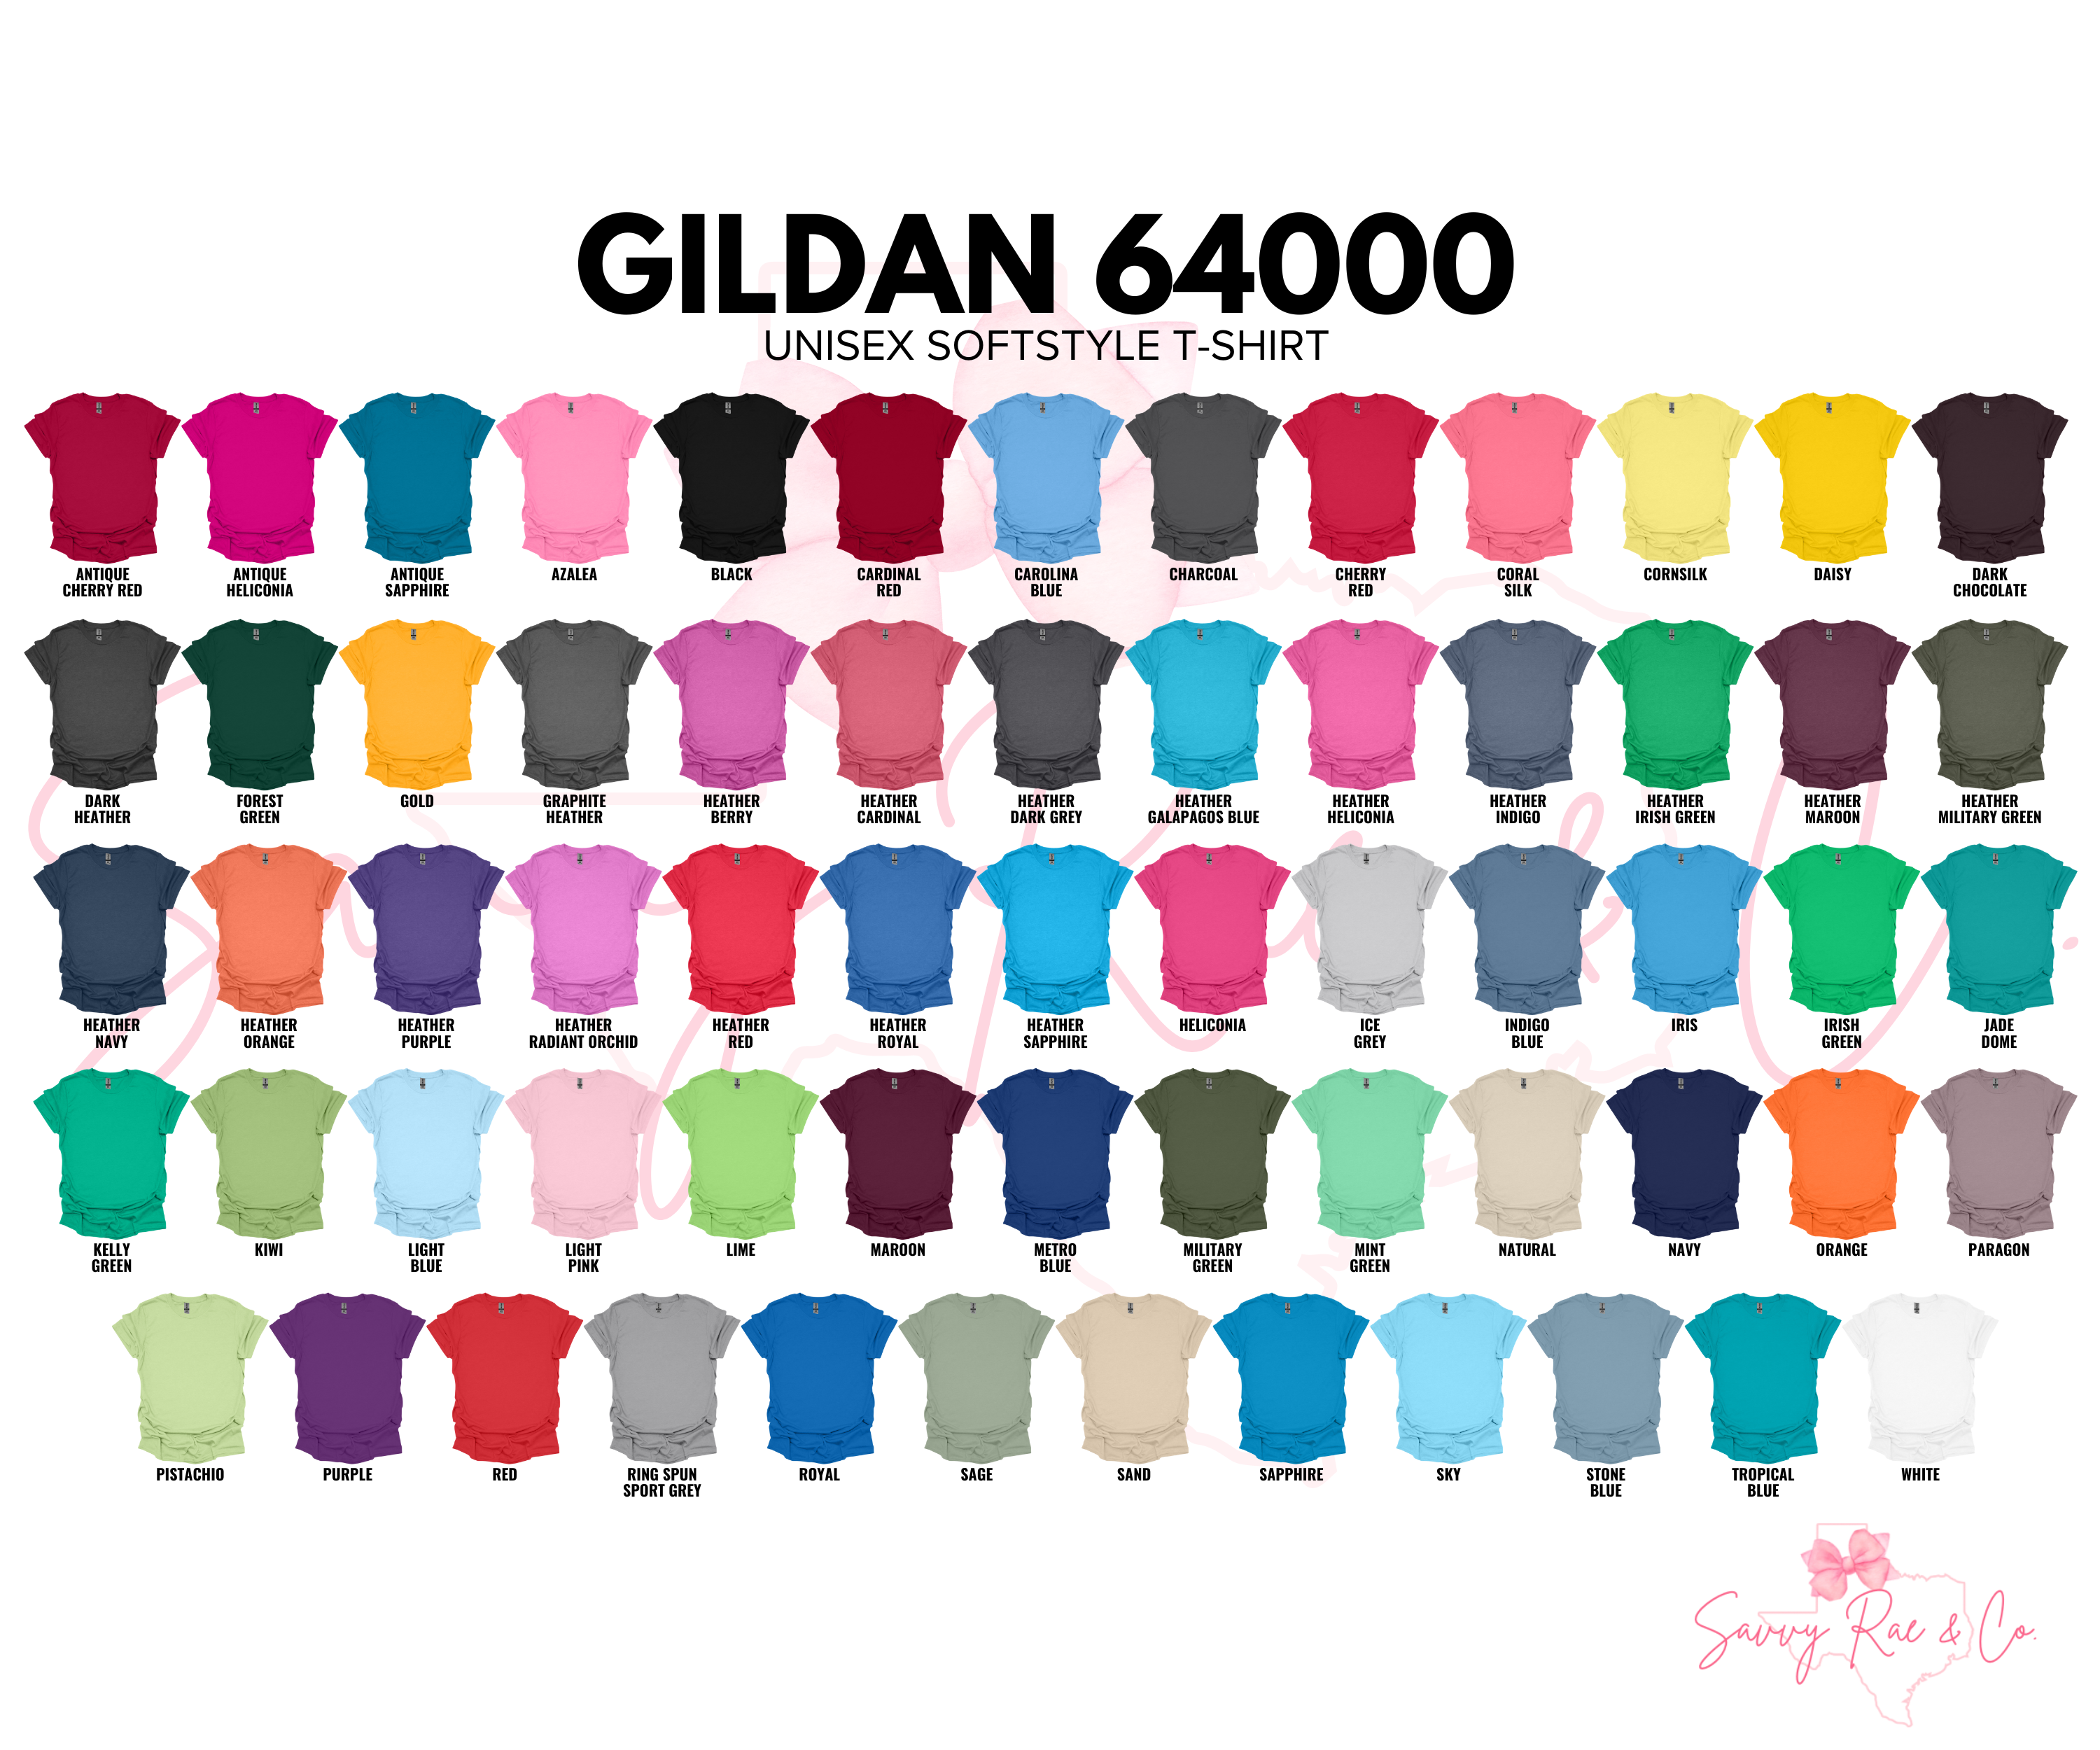 'Life is Better' Gildan Softstyle Shirts